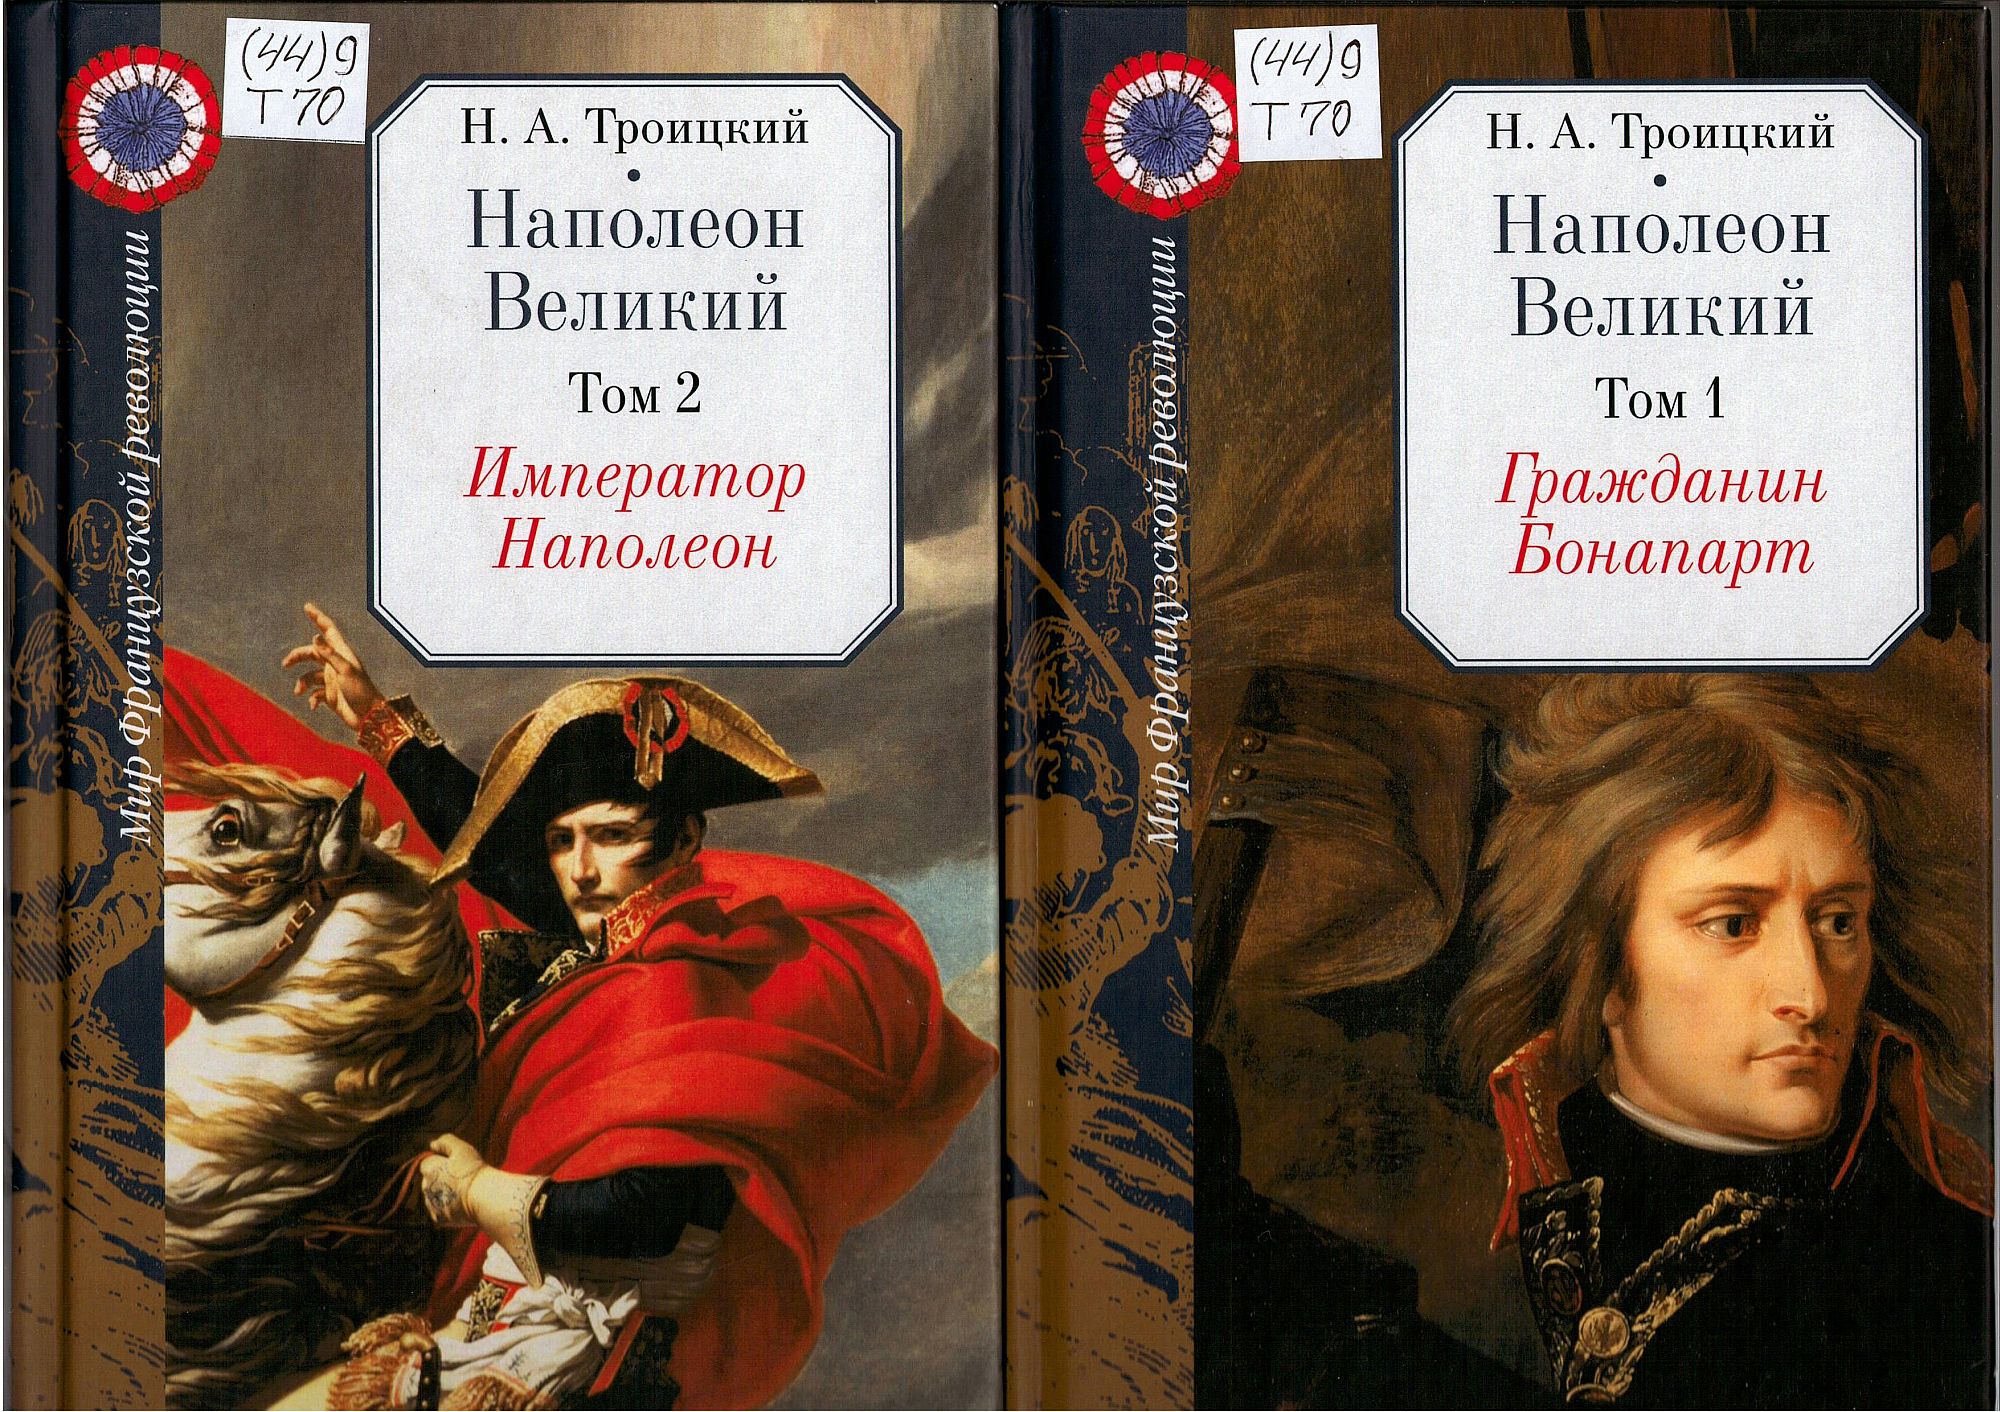 Troitsky N.A. Troitskiy N.A. Napoleon Velikiy (Napoleon the Great)